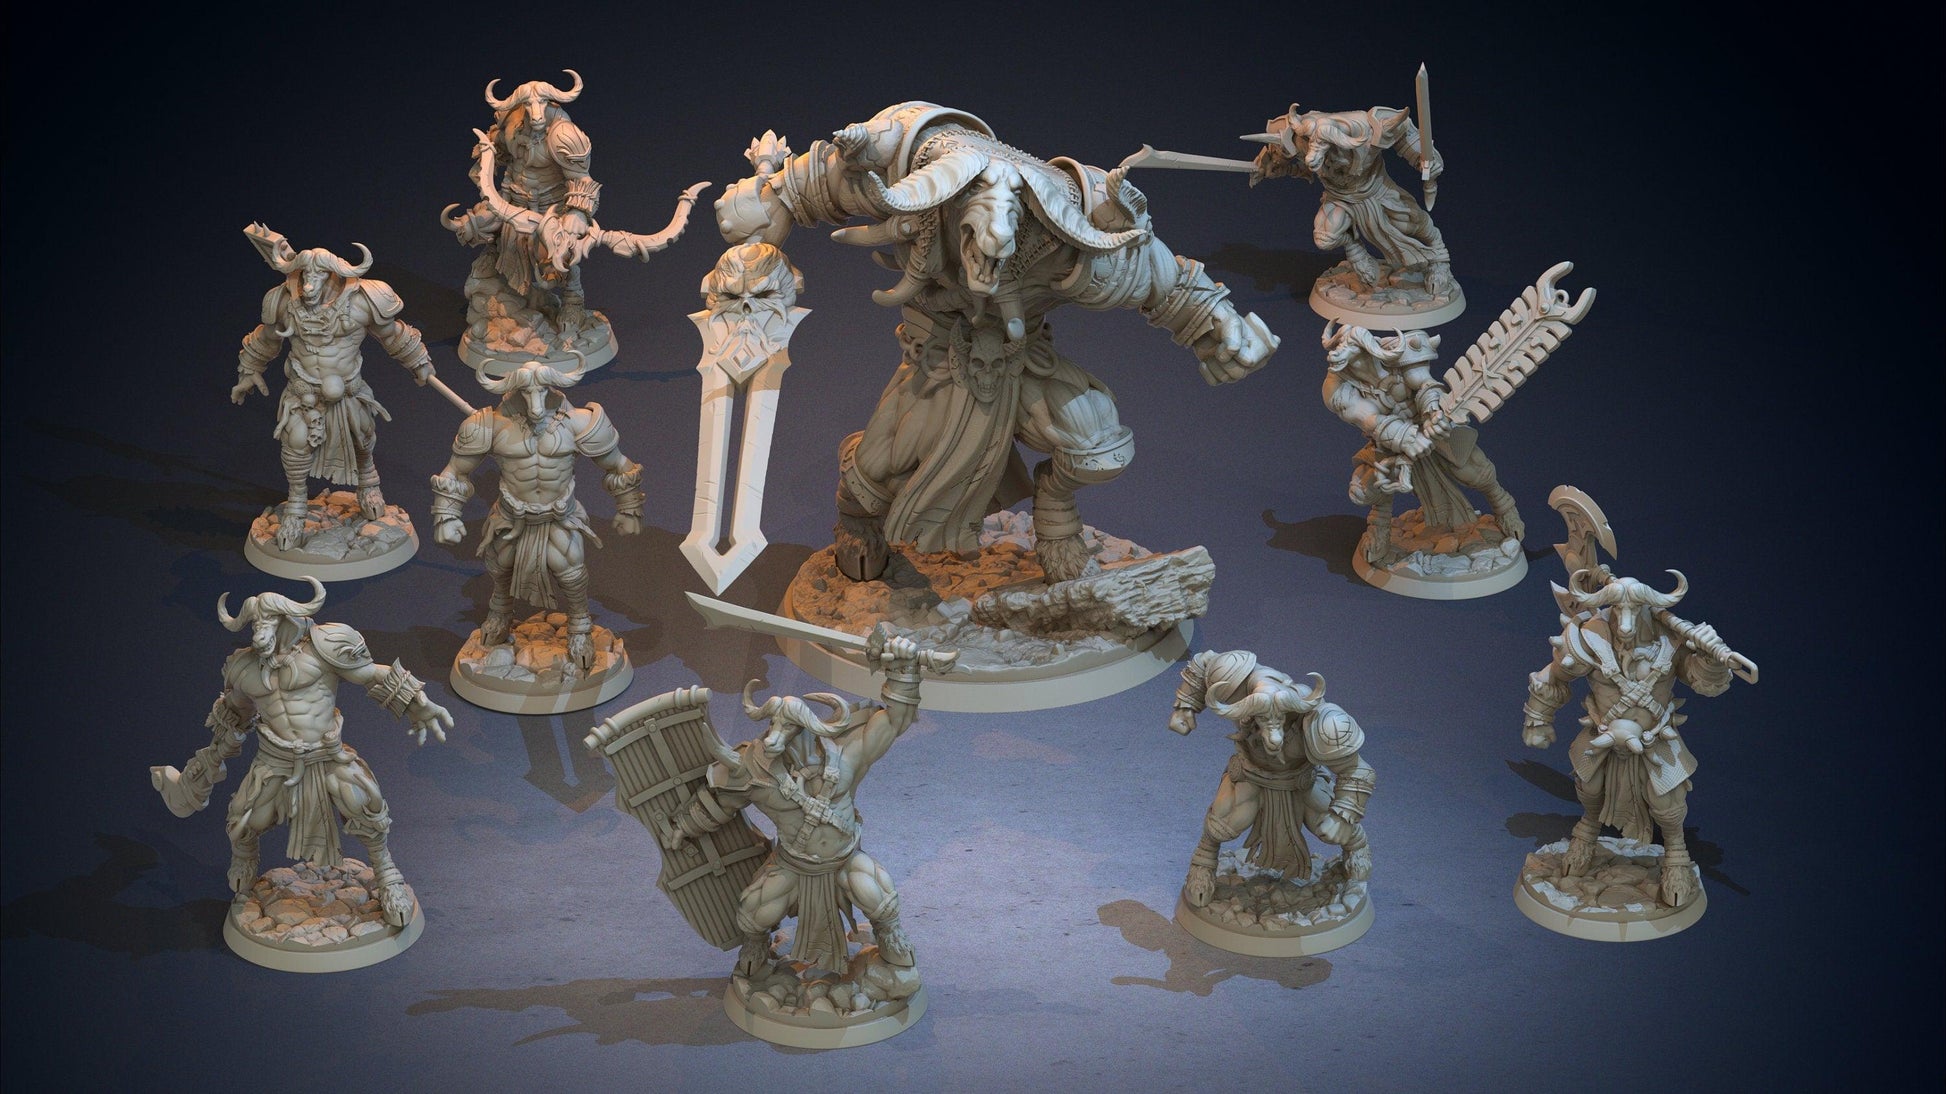 Minotaur miniature Bovine-kin Cowborn Minotaur Army | Tabletop Gaming | DnD Miniature | Dungeons and Dragons 5e - Plague Miniatures shop for DnD Miniatures